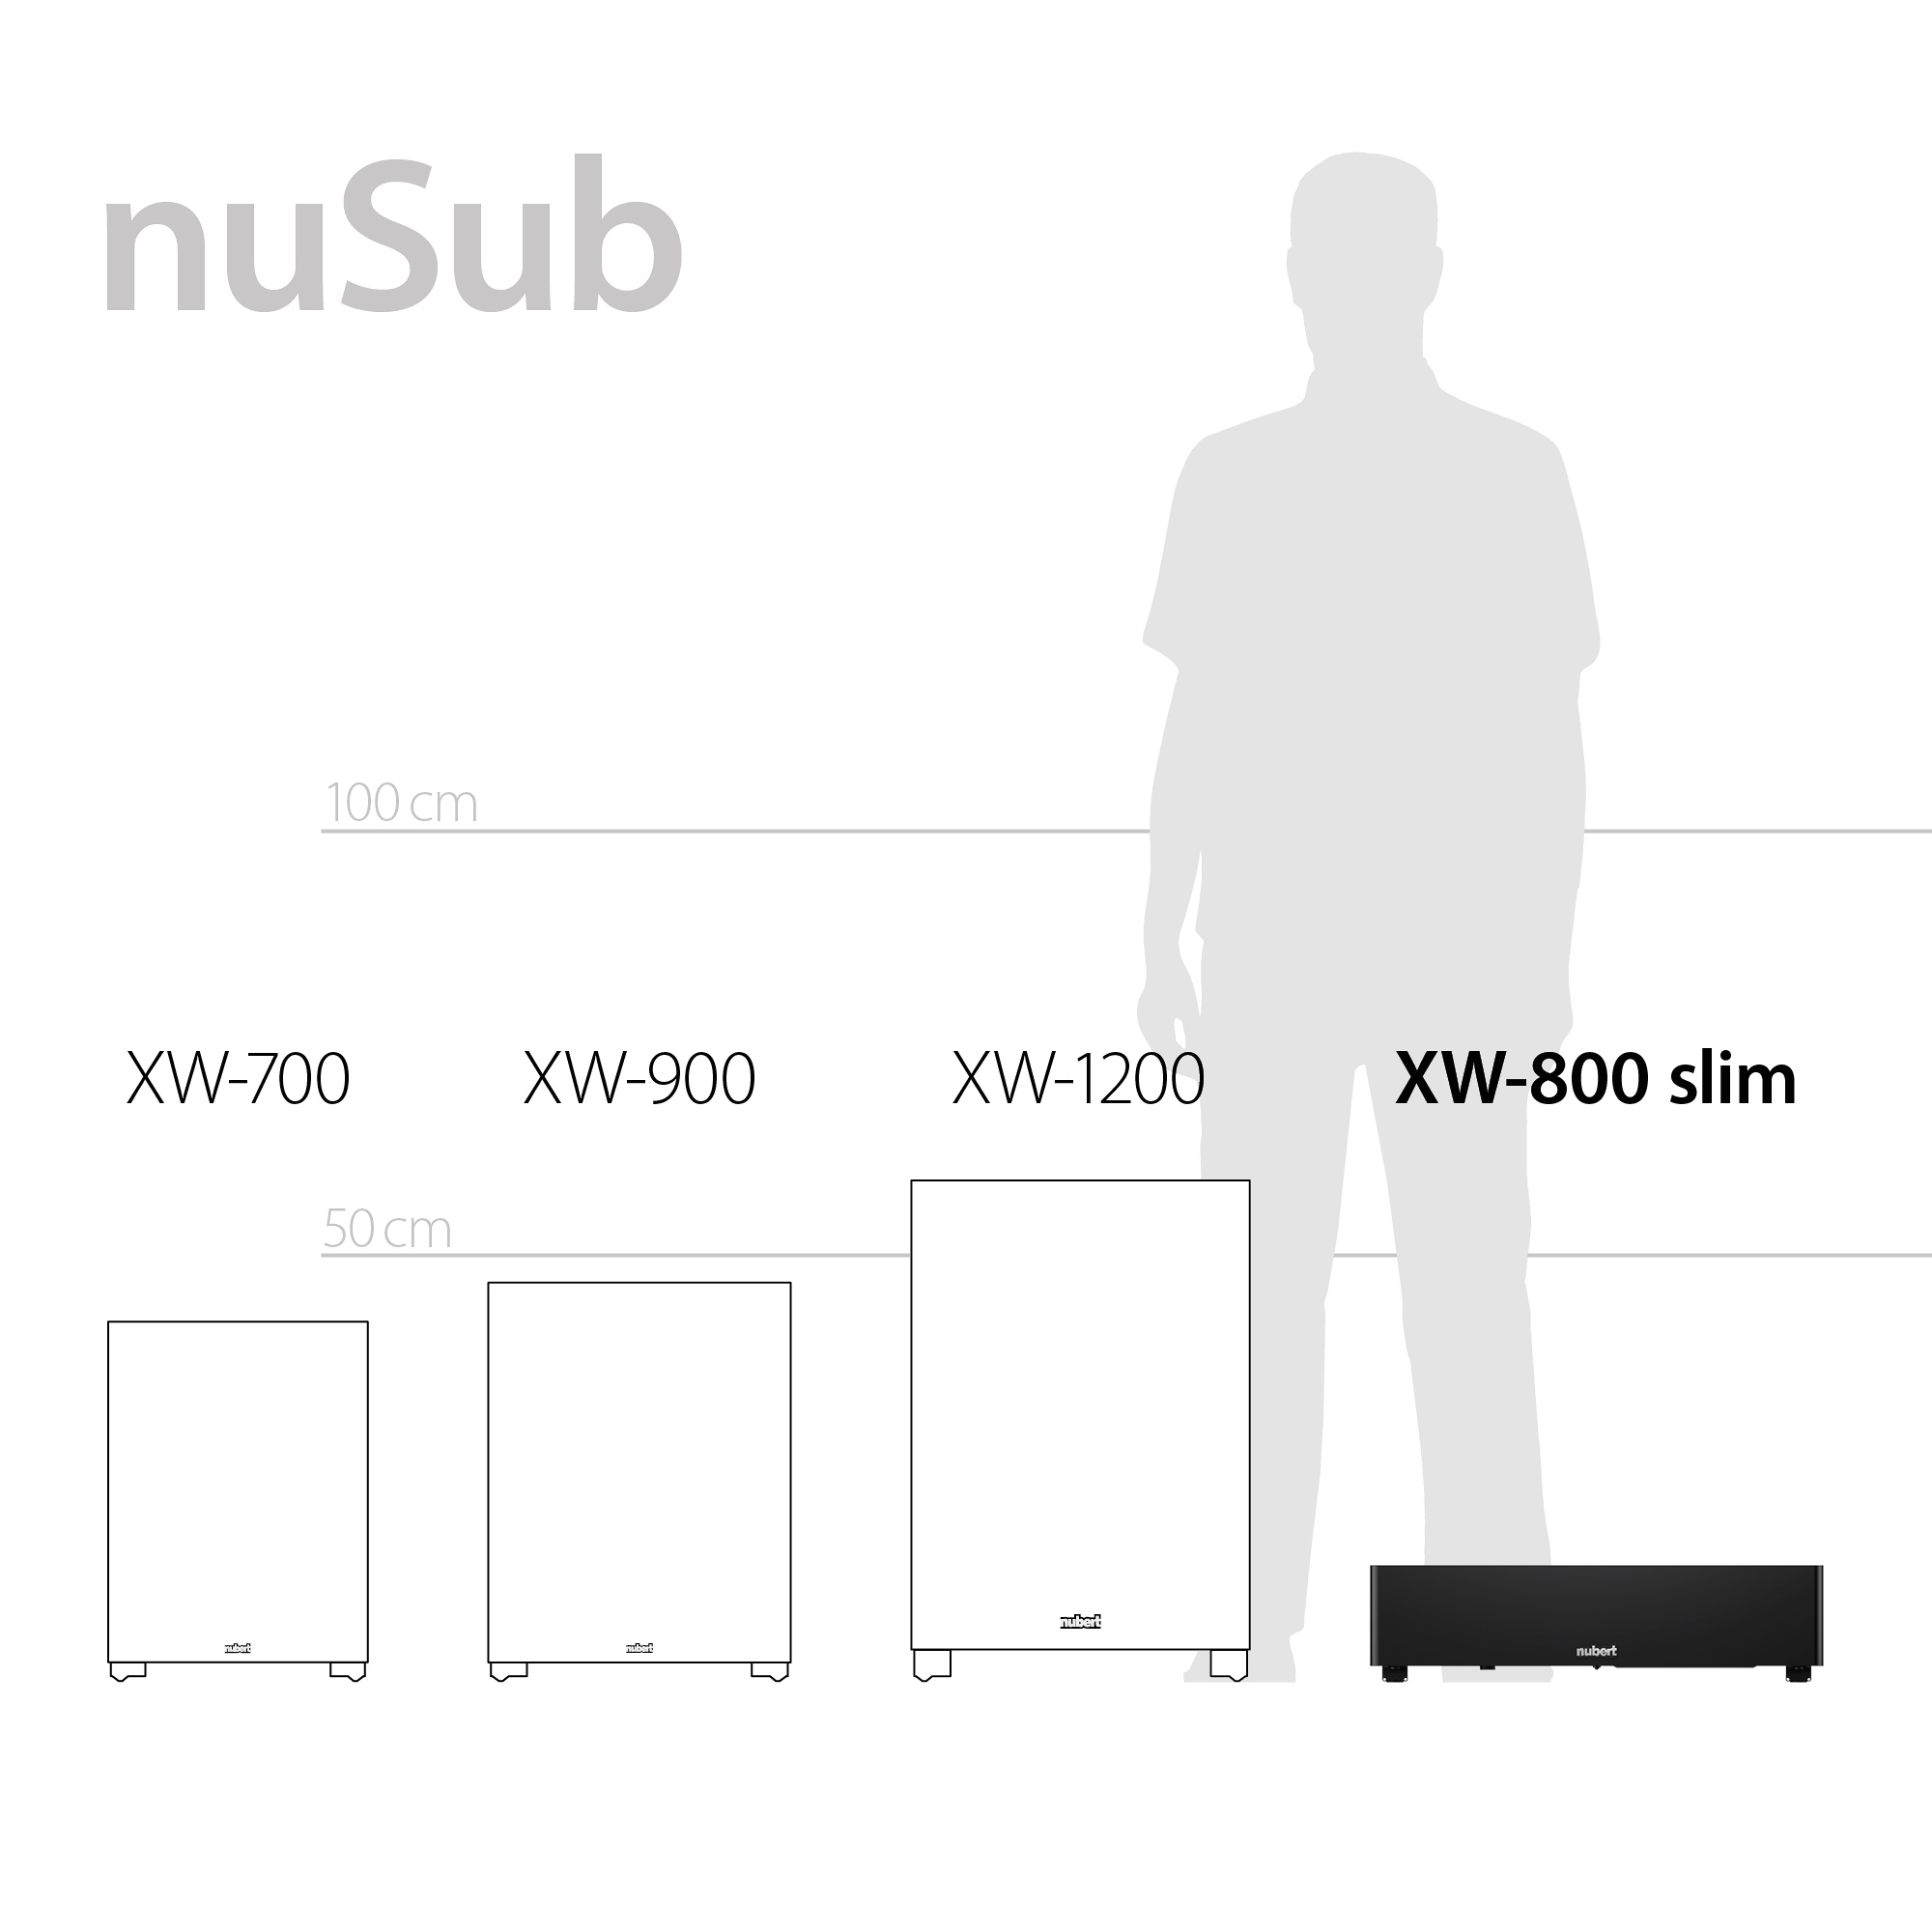 nuSub XW-800 slim Serienüberblick